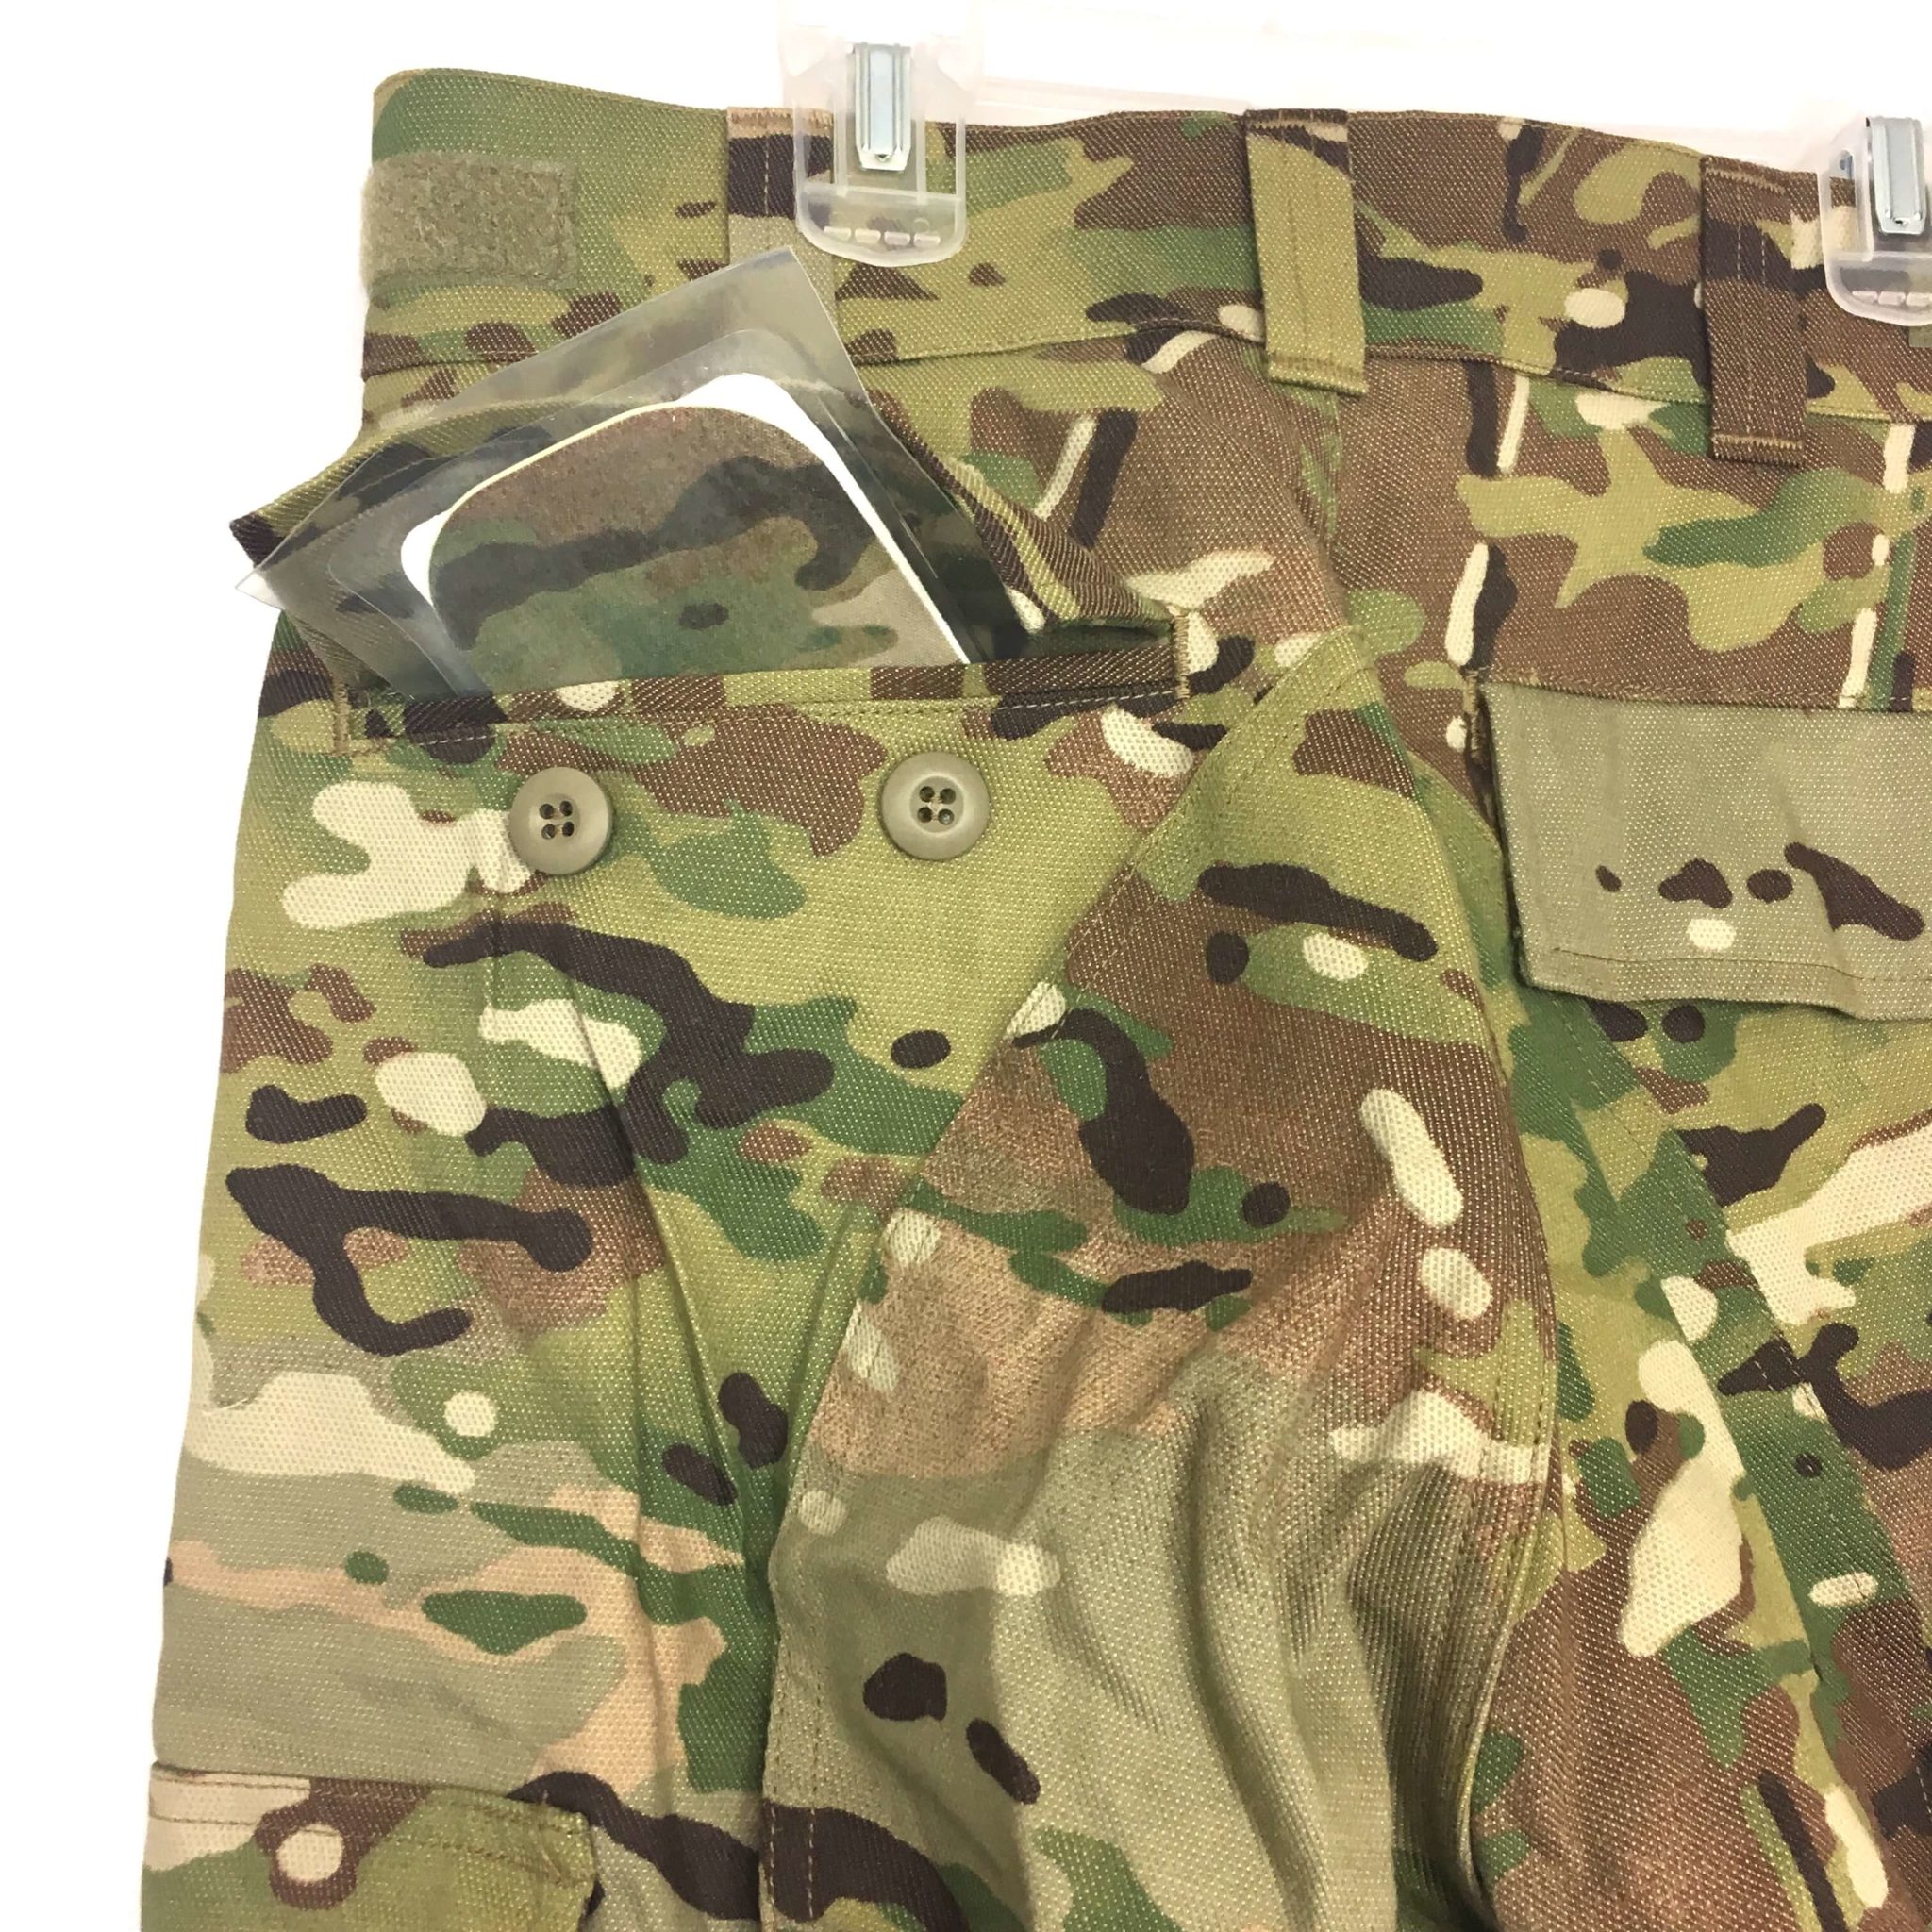 USGI Combat Pants W/ Knee Pad Slots, Textured, Multicam